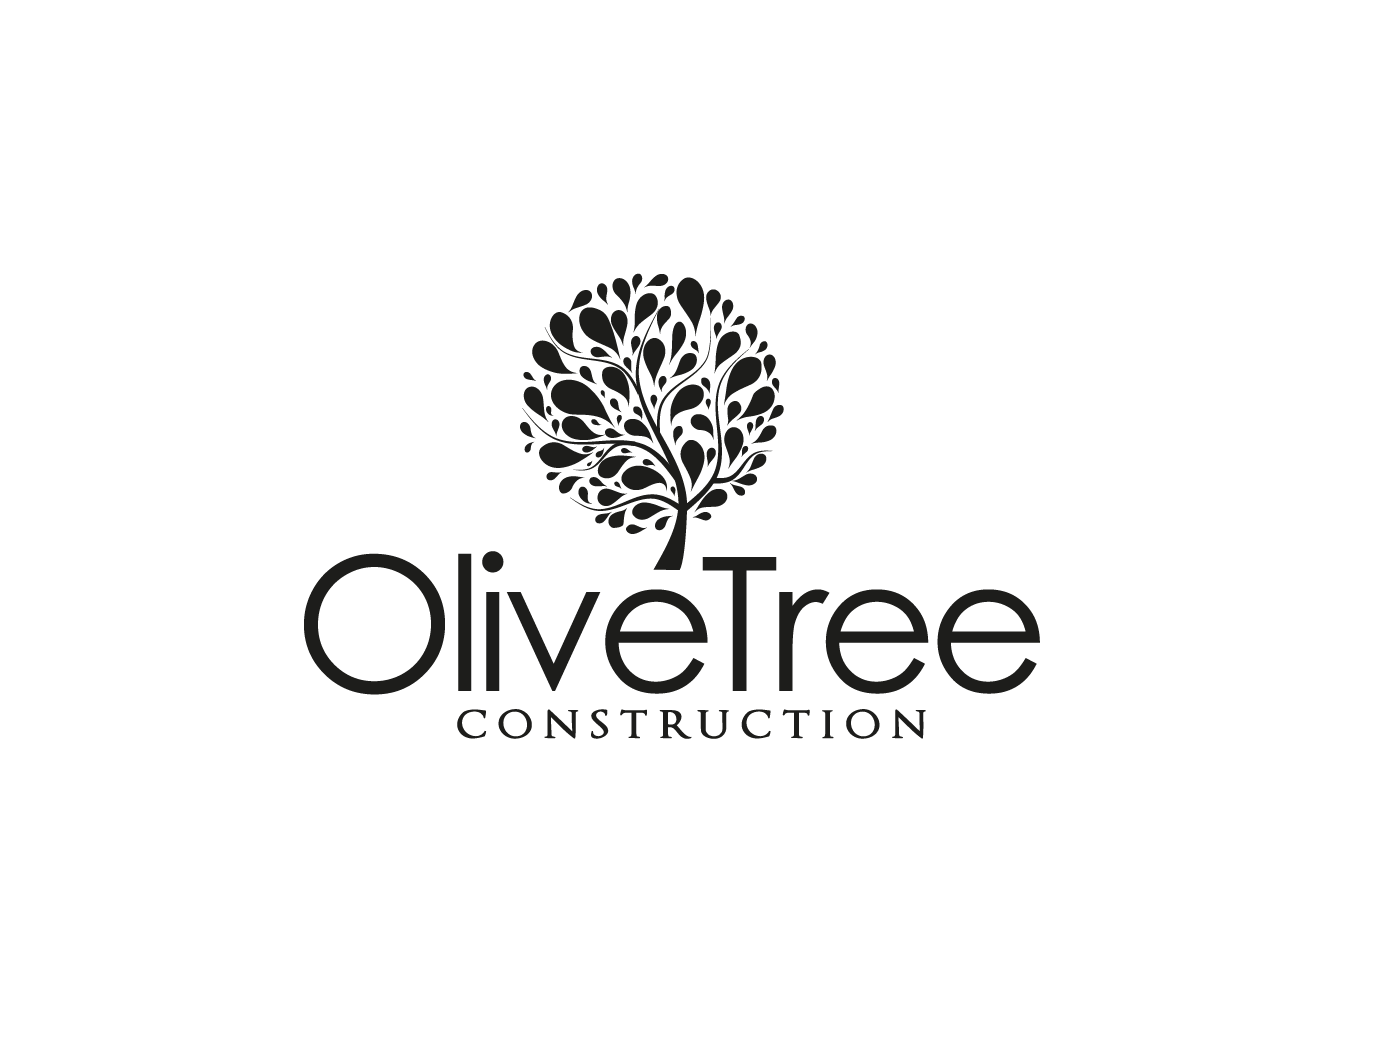 Olive Tree Logo - Modern, Professional, Construction Logo Design for Olive Tree